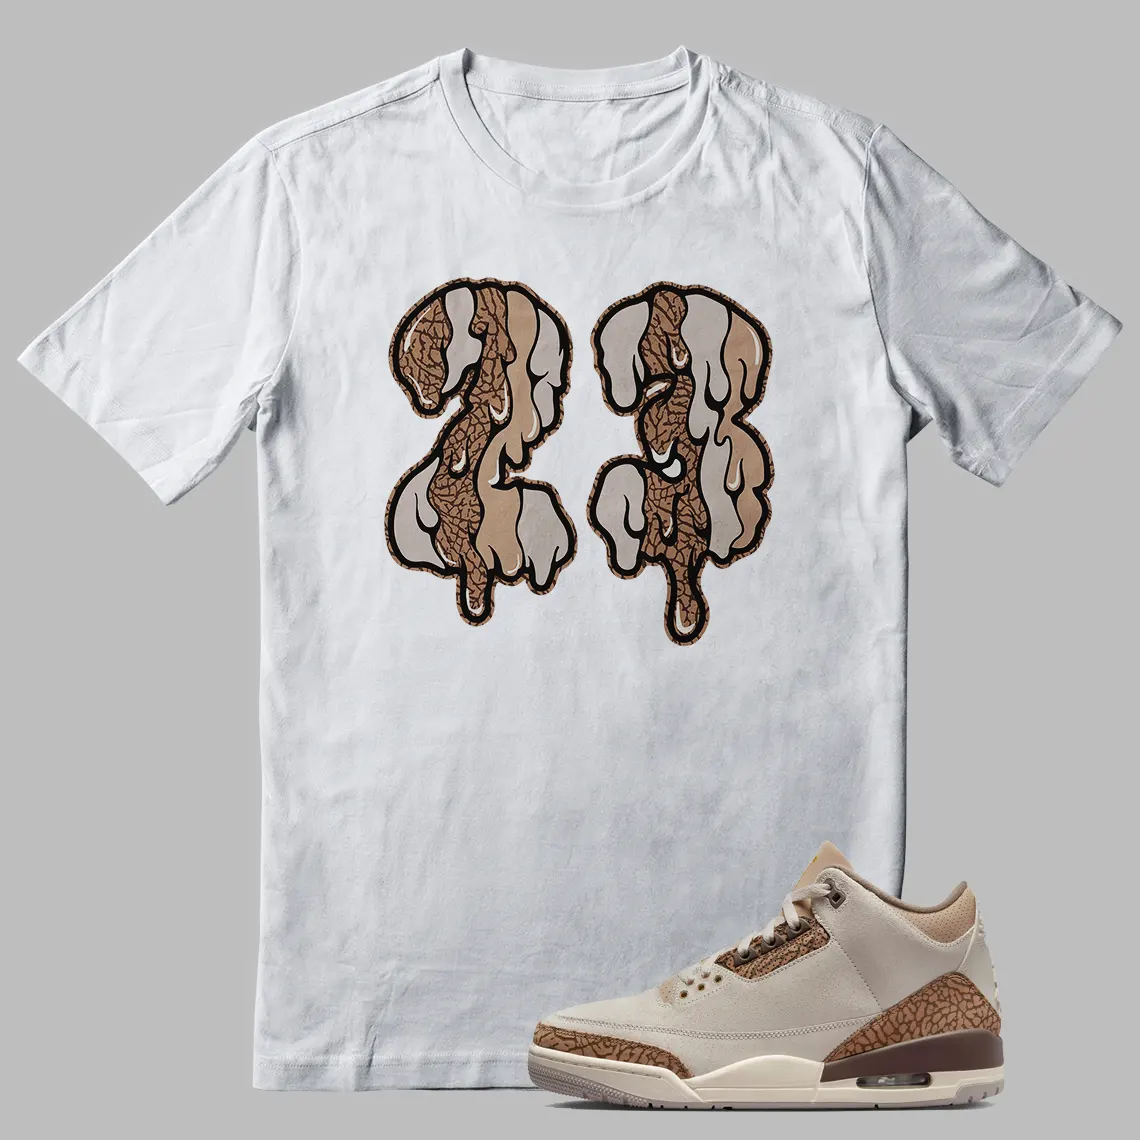 Jordan 3 Palomino T-shirt Dripping 23 Graphic